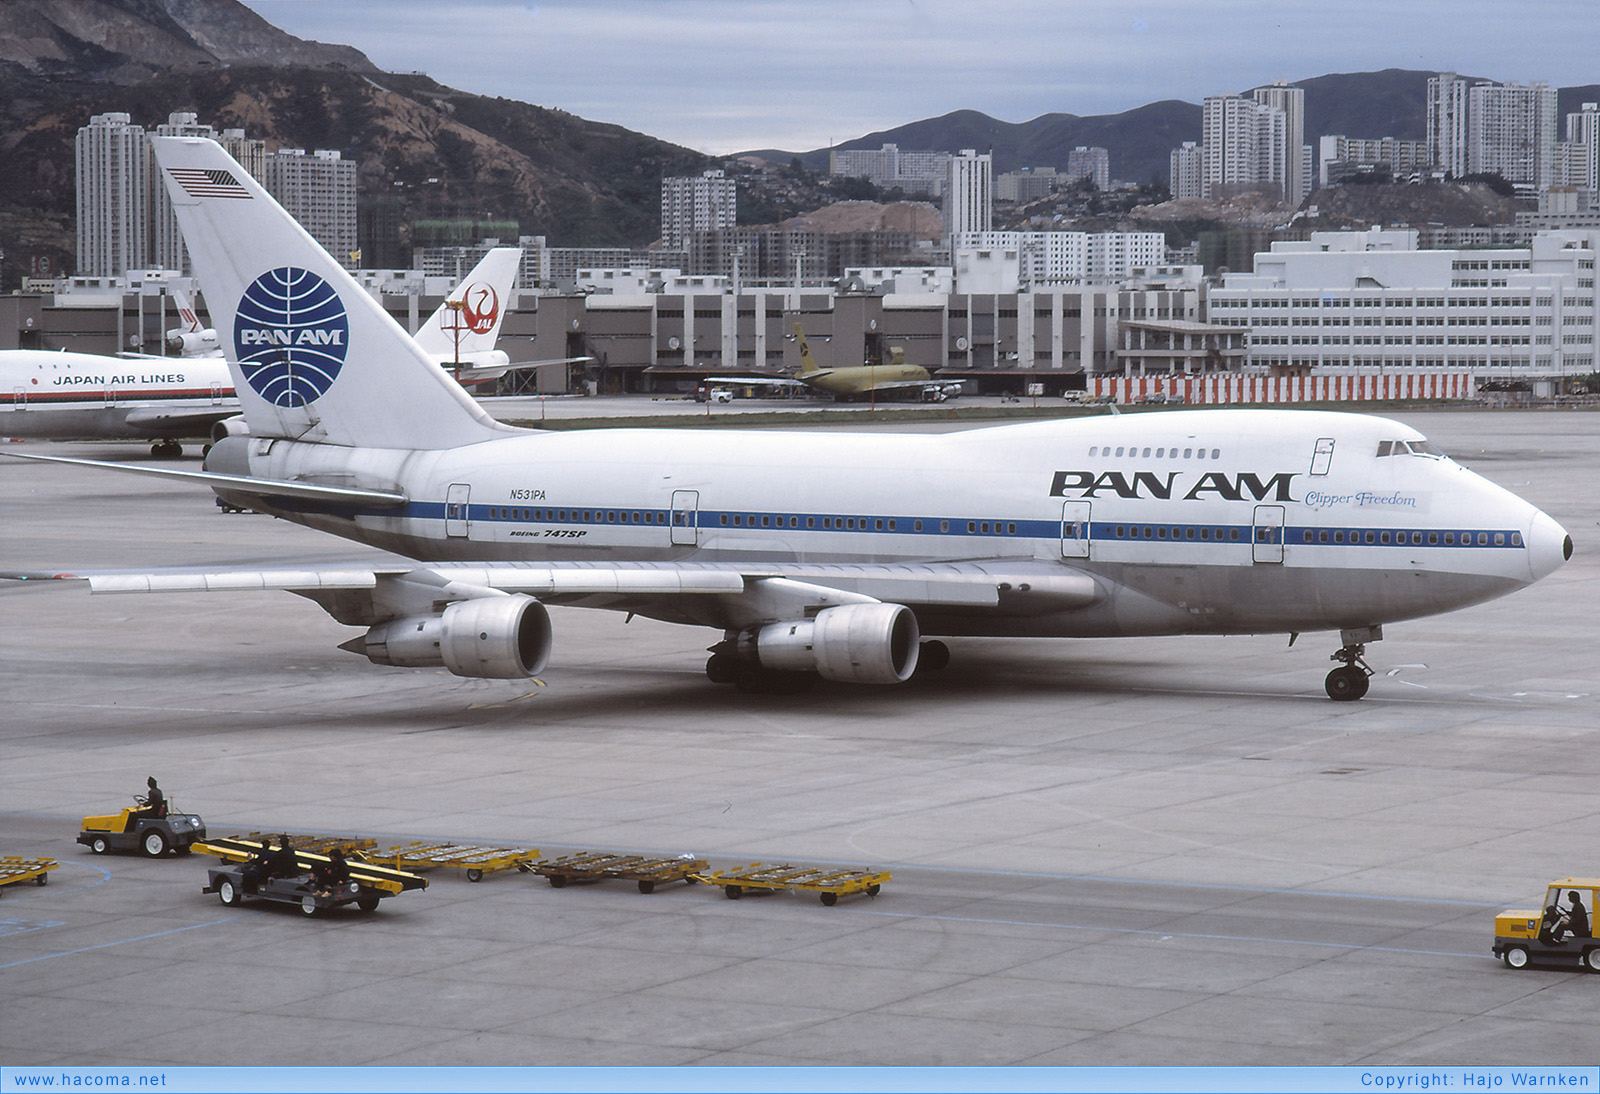 Foto von N531PA - Pan Am Clipper Liberty Bell / Freedom - Flughafen Kai Tak - 14.04.1980